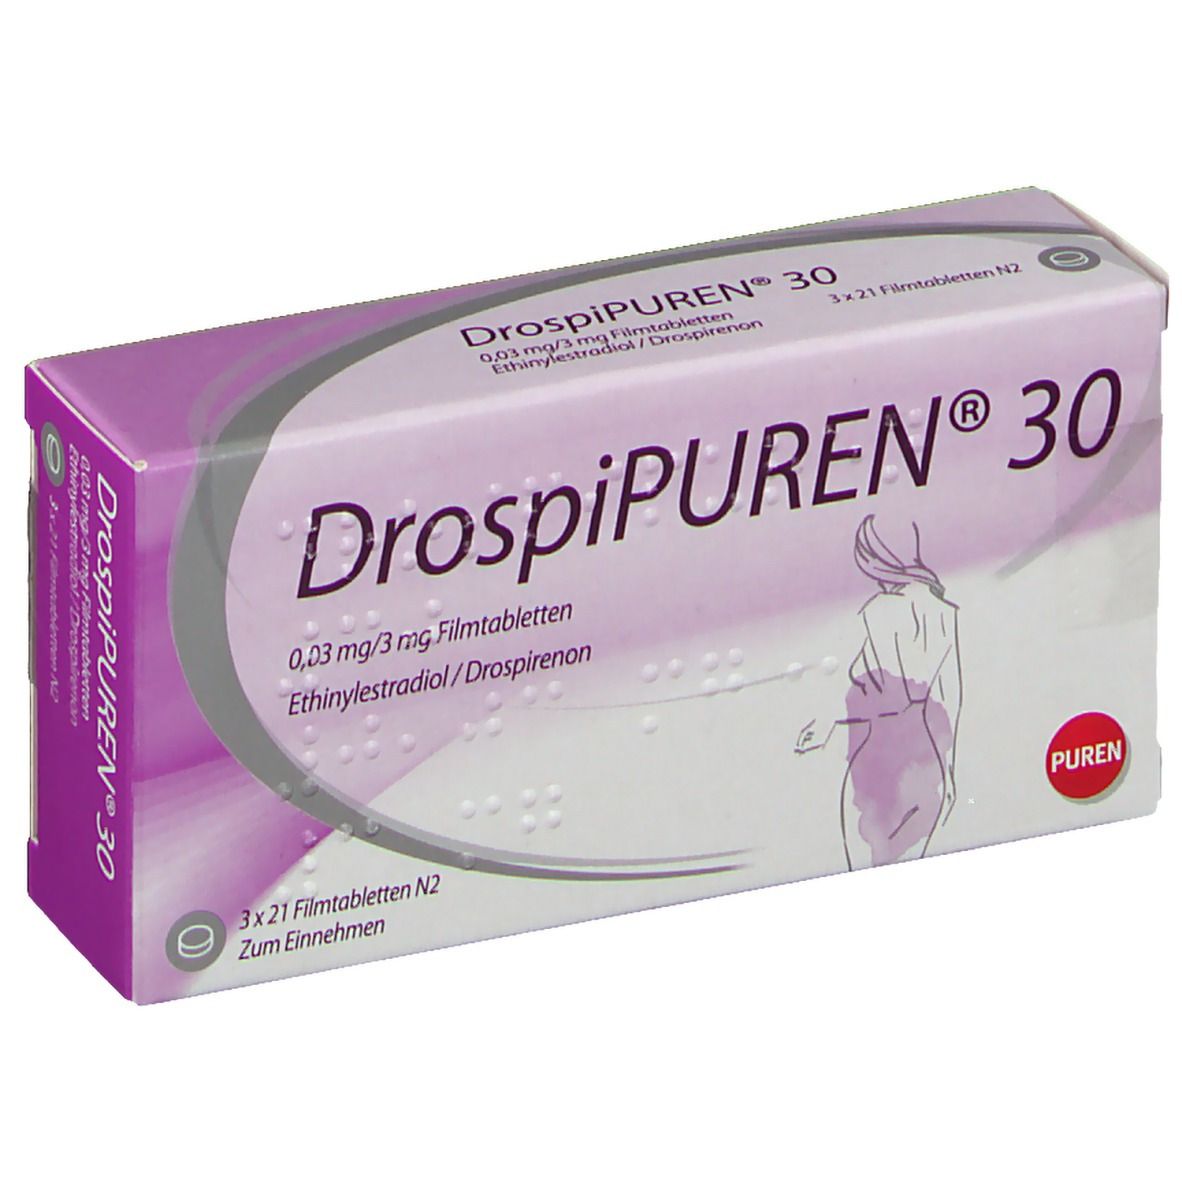 DrospiPUREN® 30 0,03 mg/3 mg